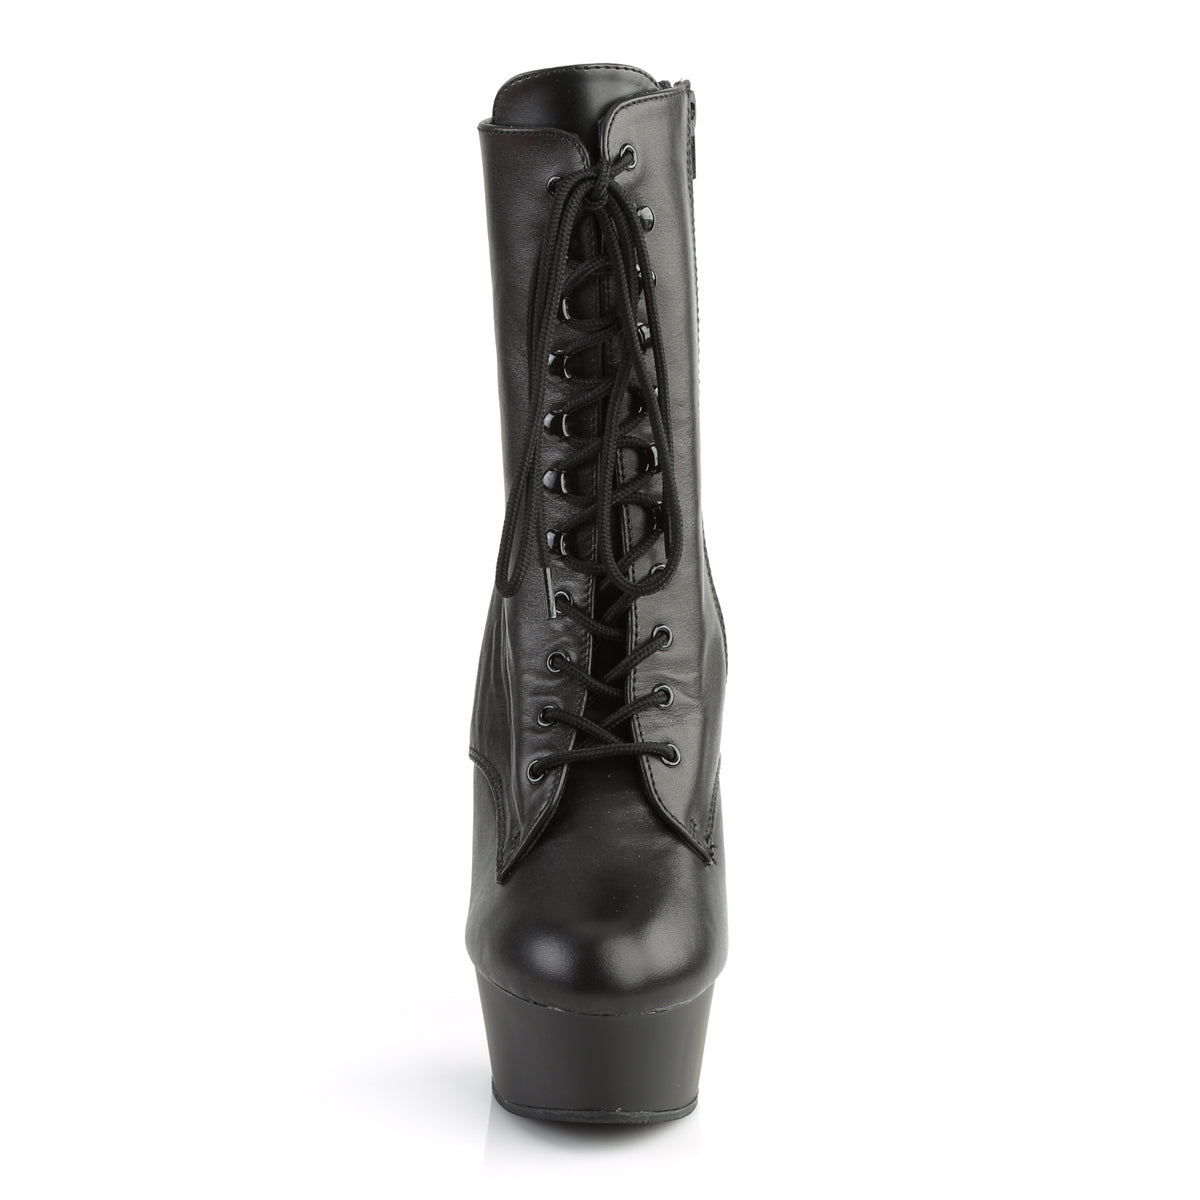 DELIGHT-1020 6" Heel Black Leather Pole Dancing Platforms-Pleaser- Sexy Shoes Alternative Footwear